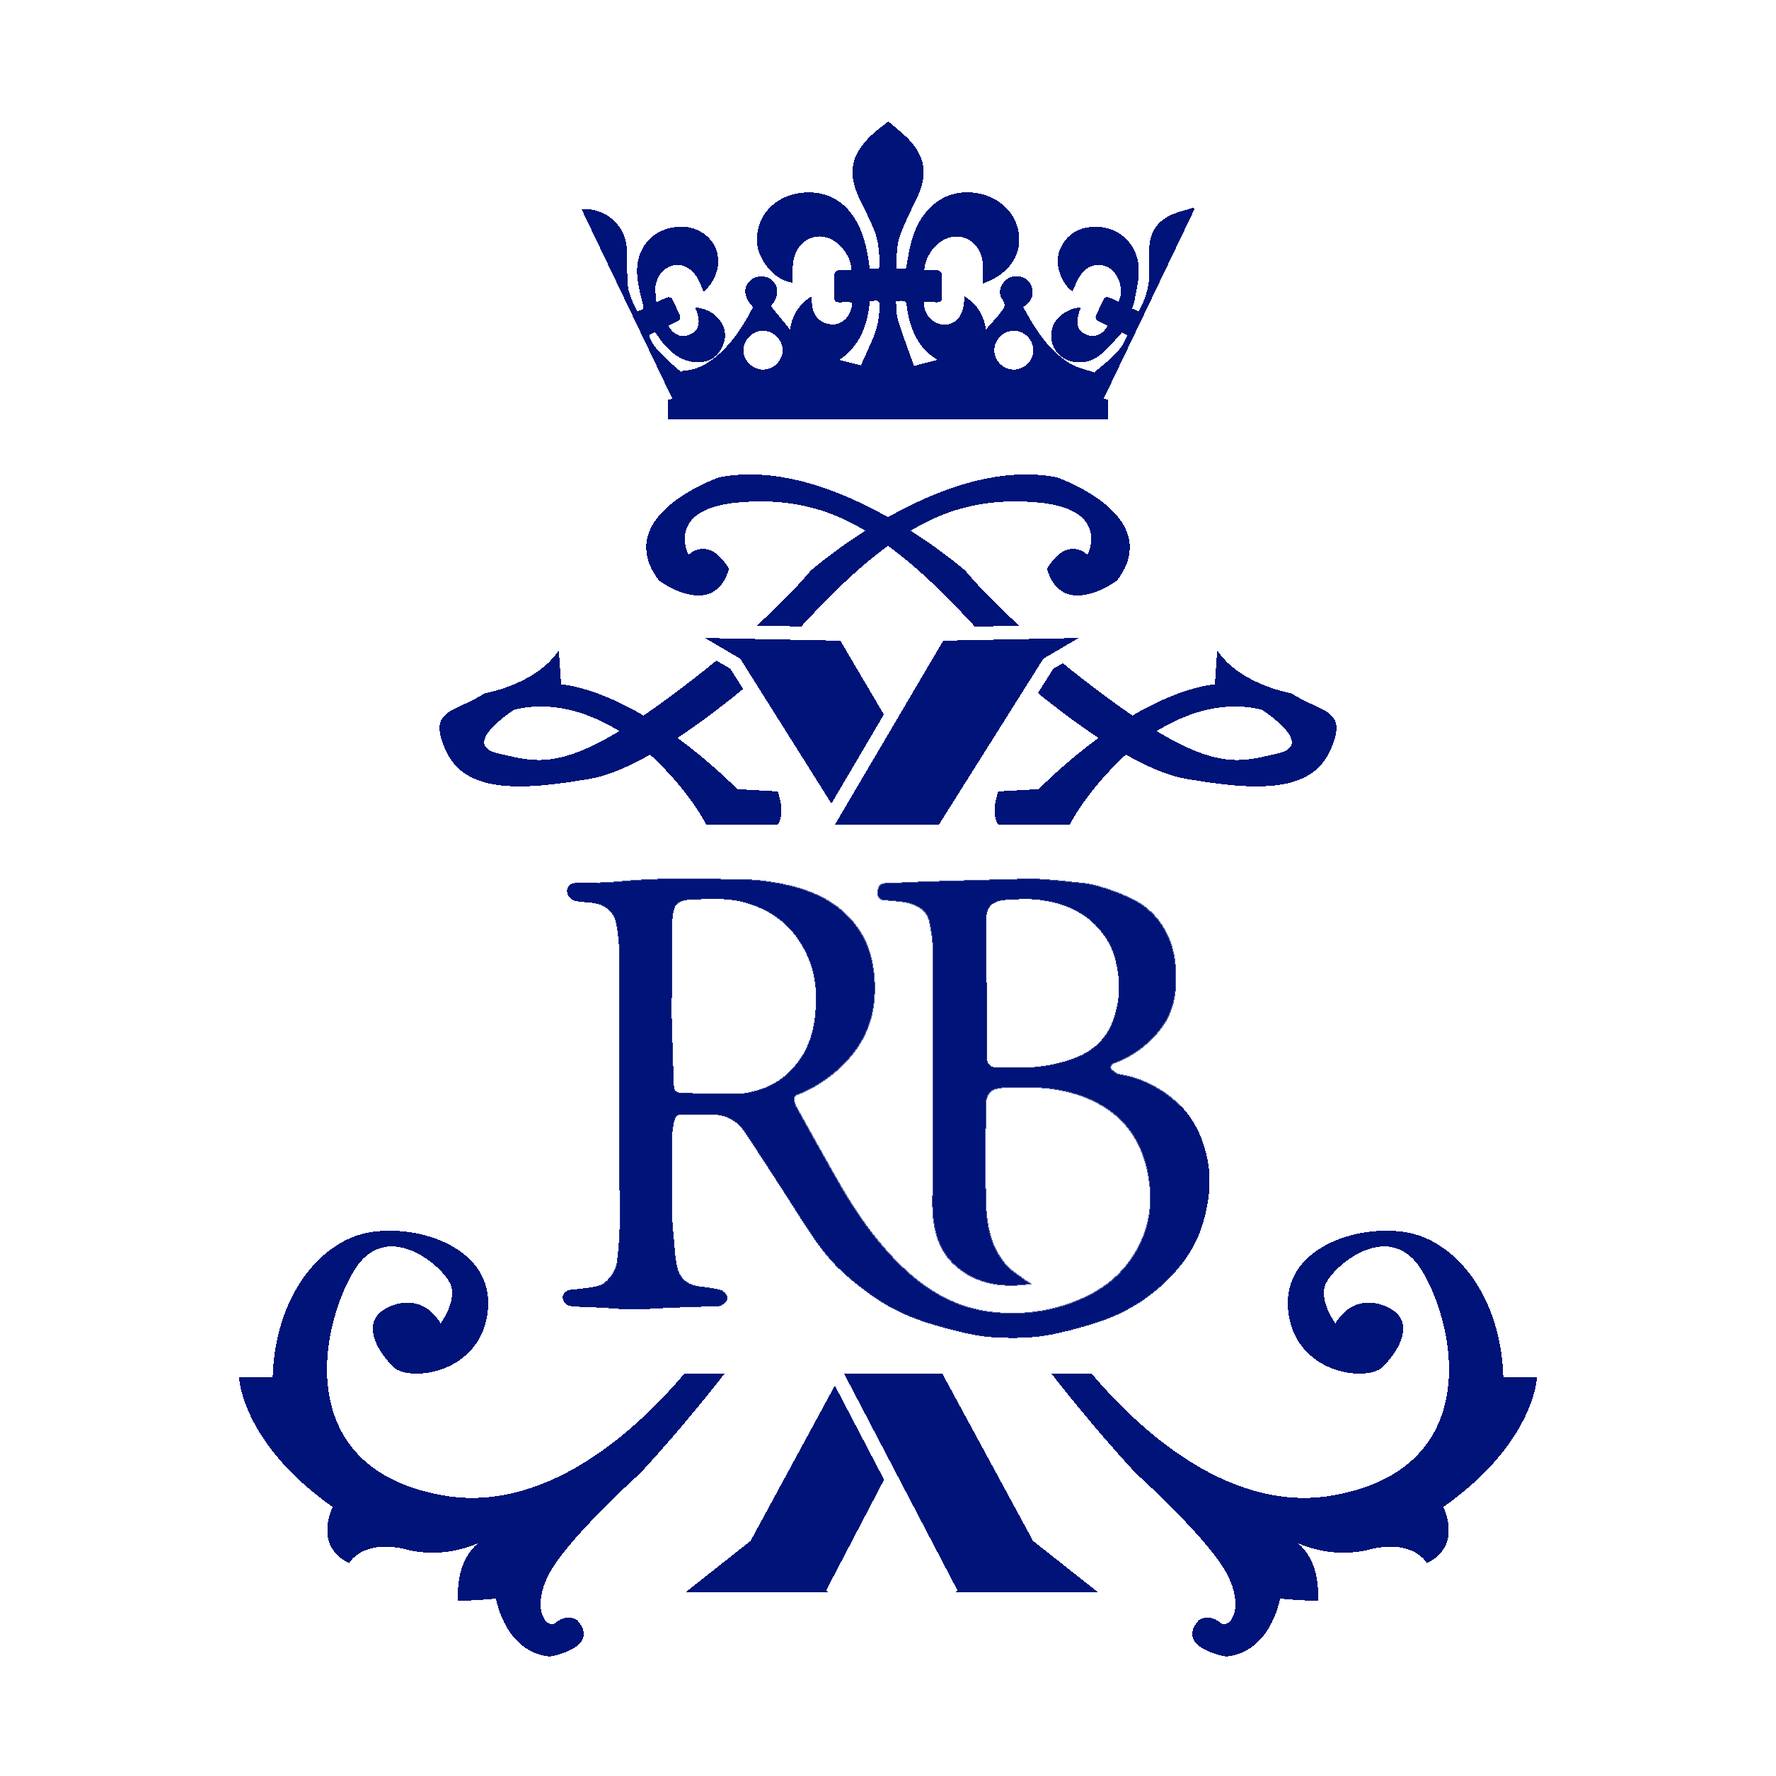 The Royal British International School - Kindergarten